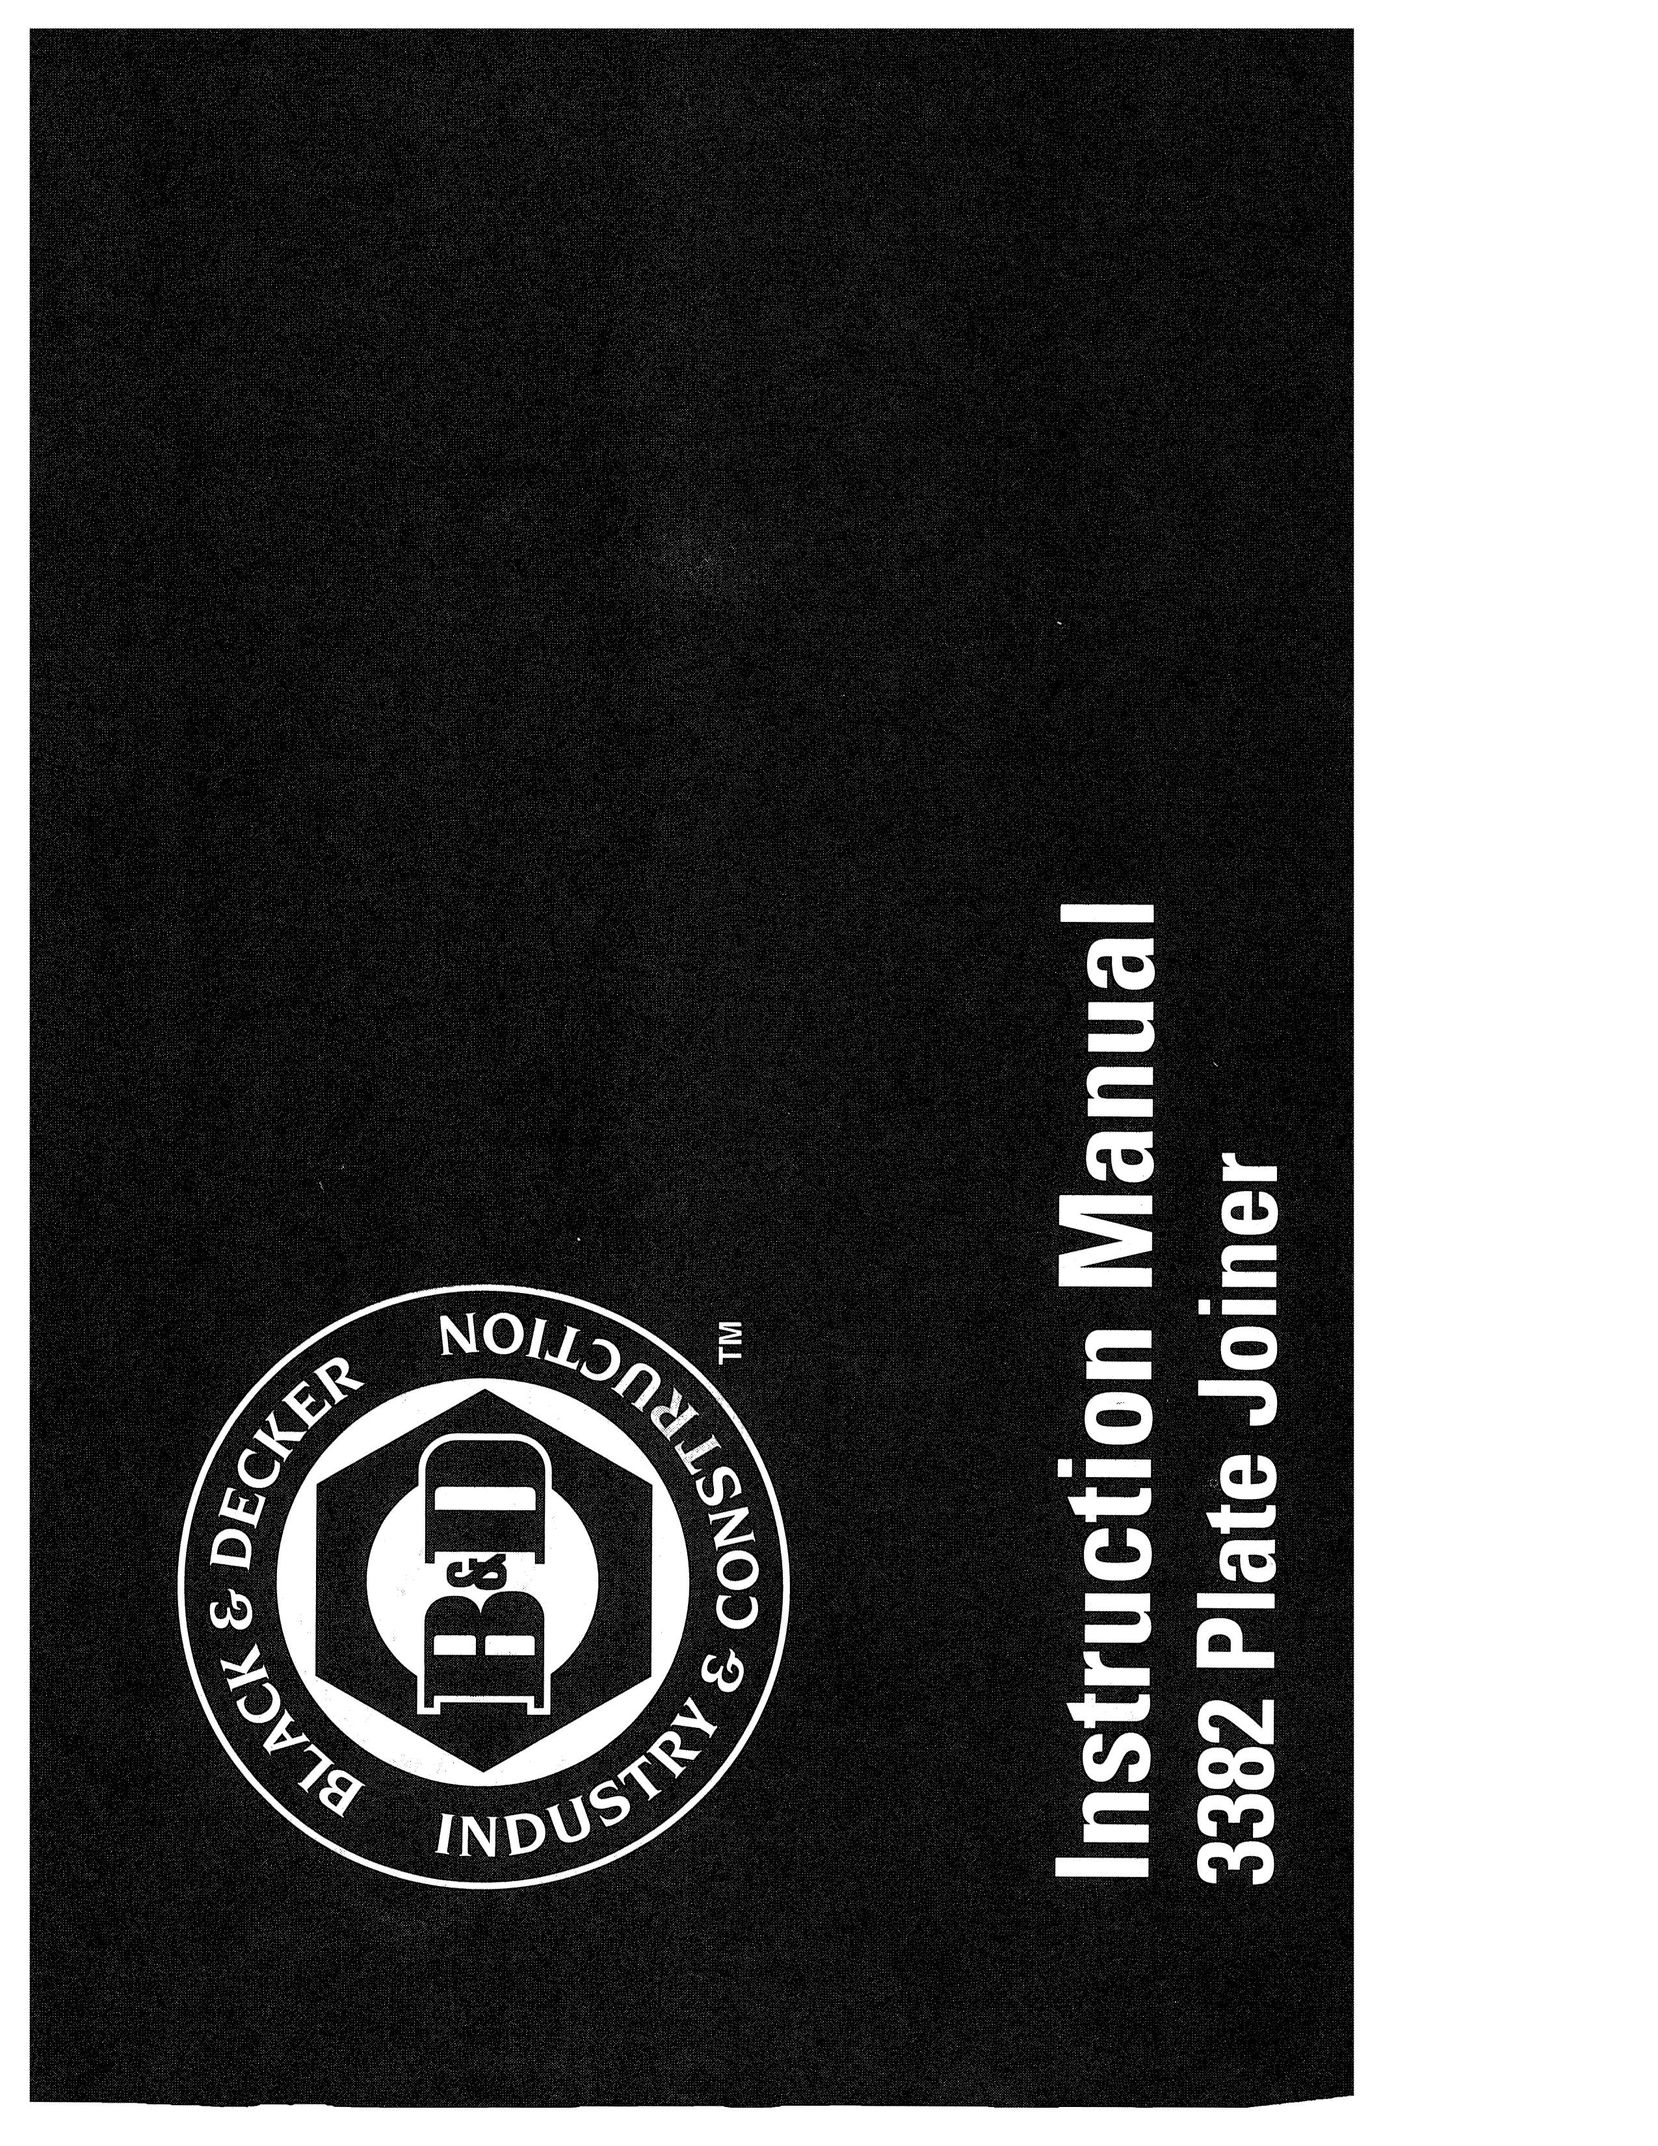 Black & Decker 3382 Biscuit Joiner User Manual